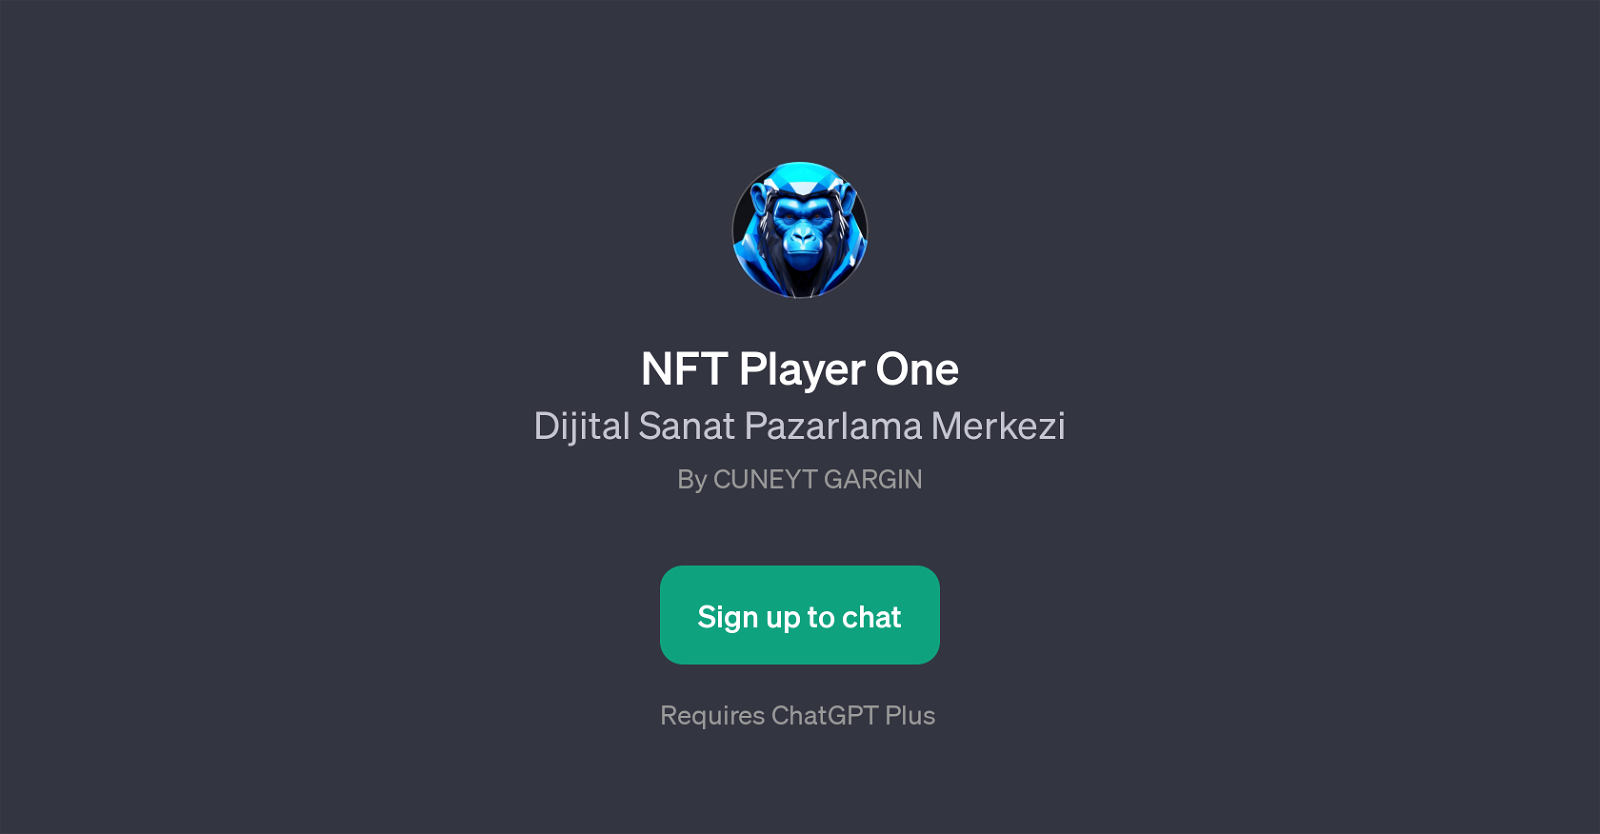 NFT Player One website